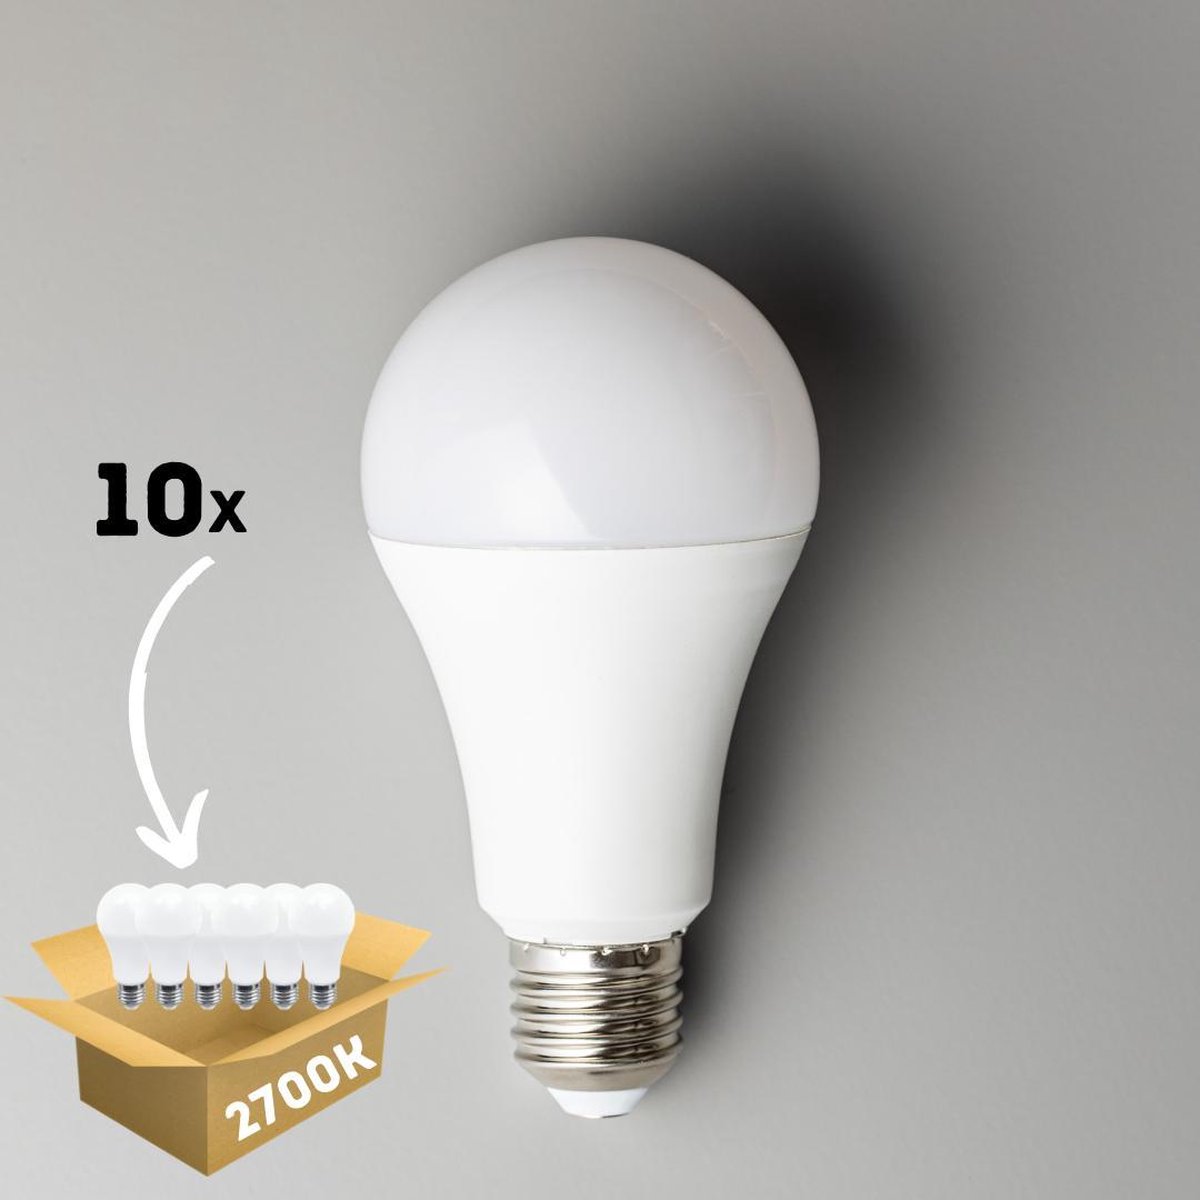 Proventa LongLife LED Lampen met grote E27 fitting - Voordeelverpakking -  10 x LED lamp | bol.com